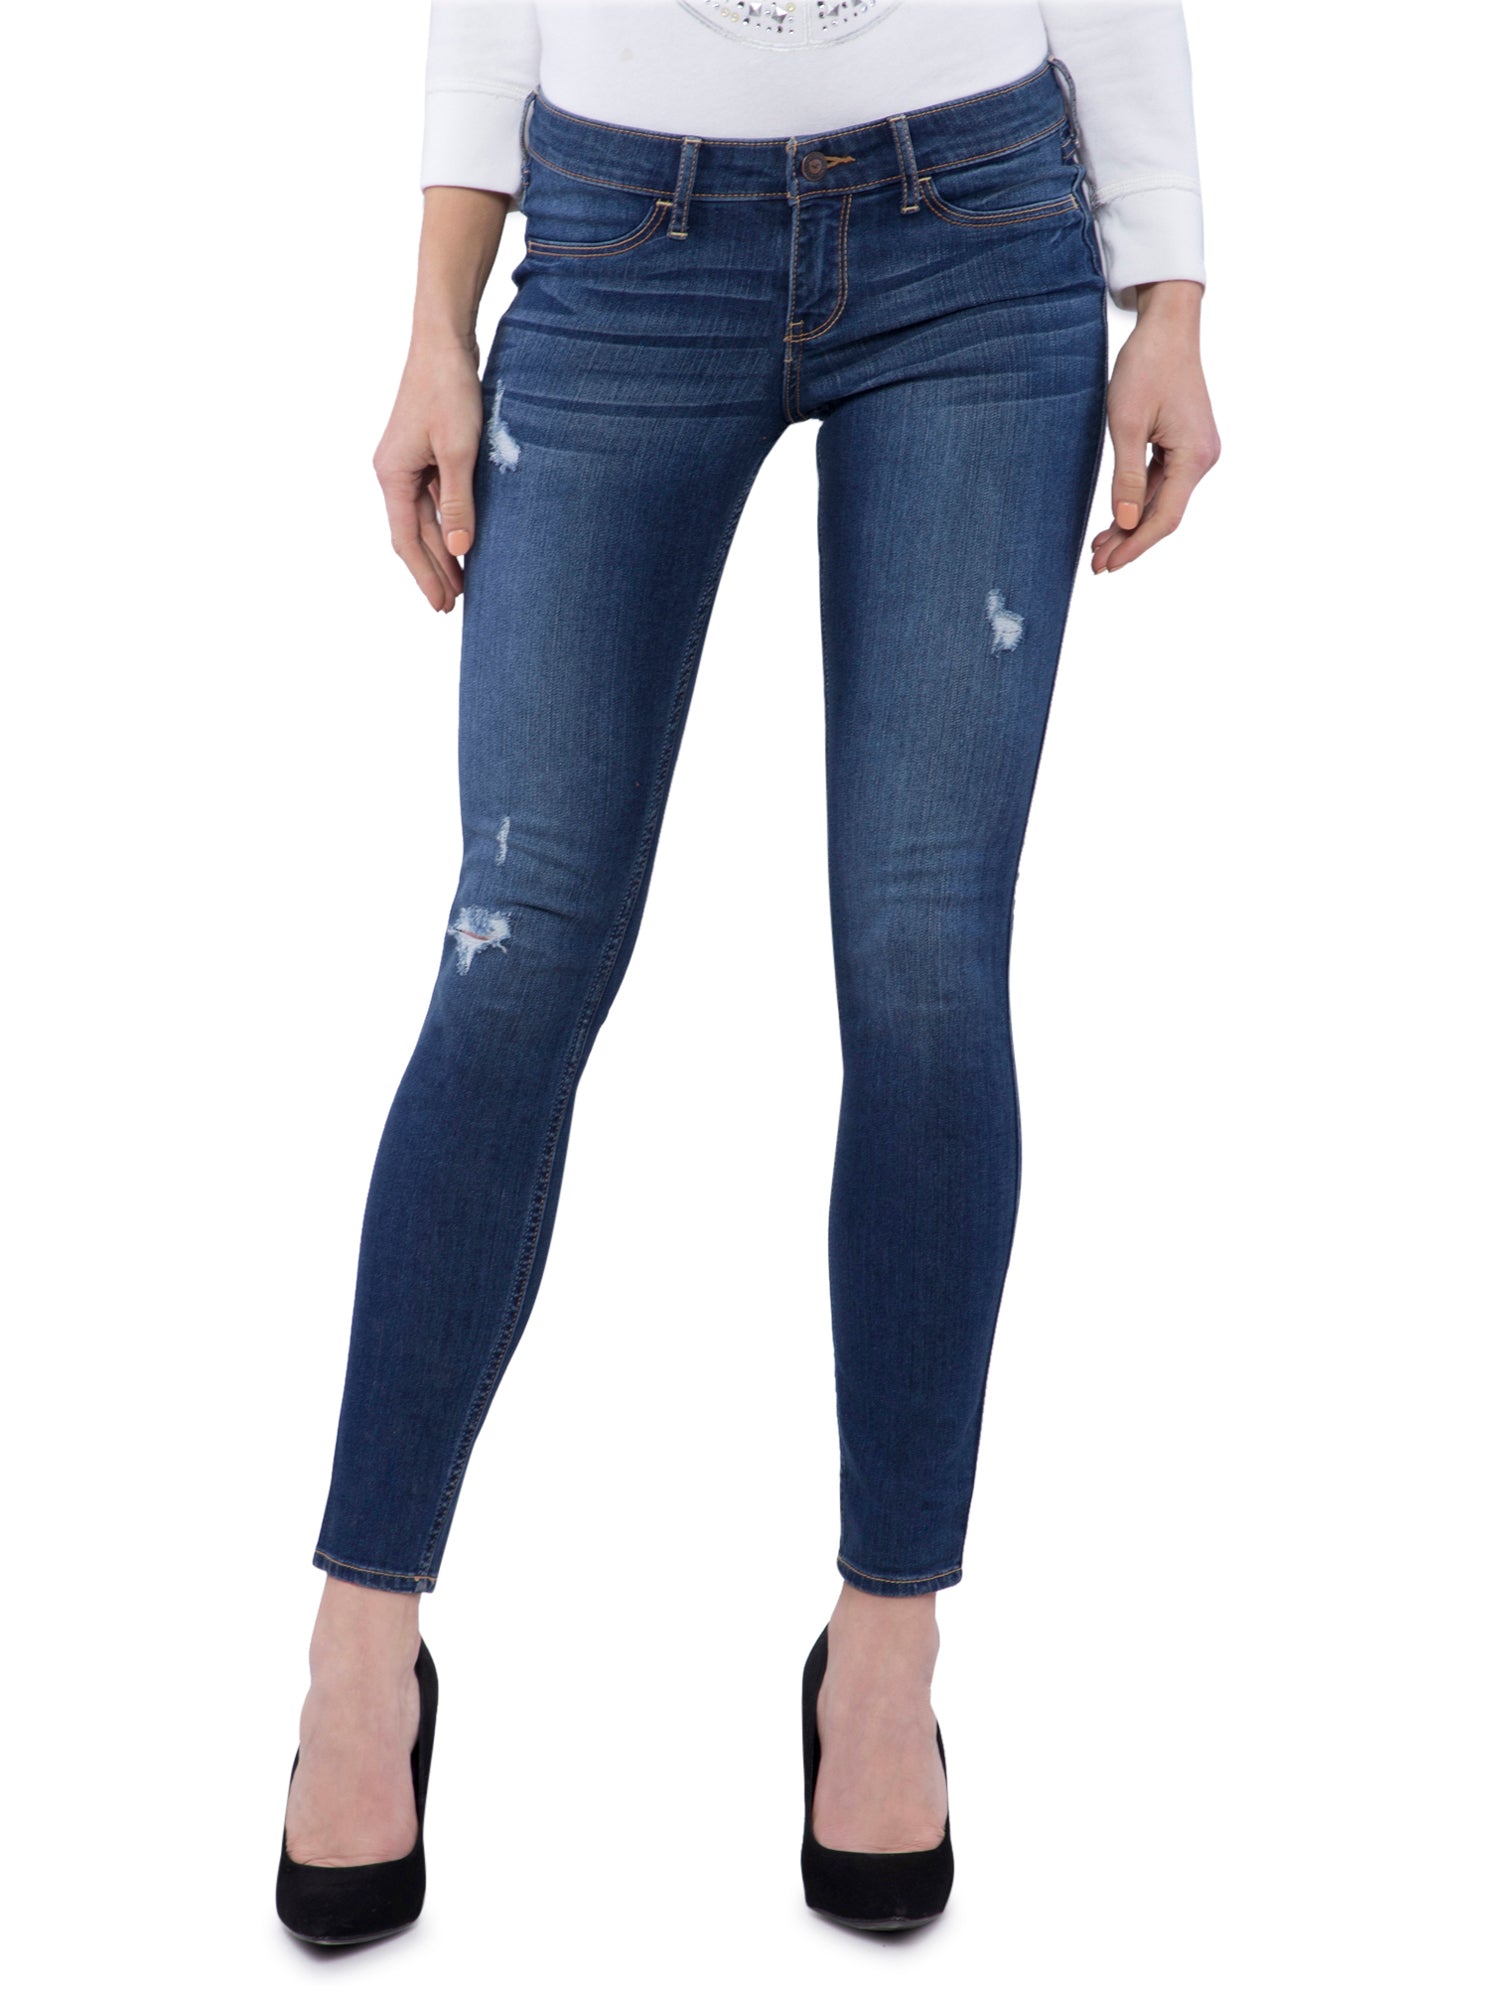 hollister skinny jeans womens